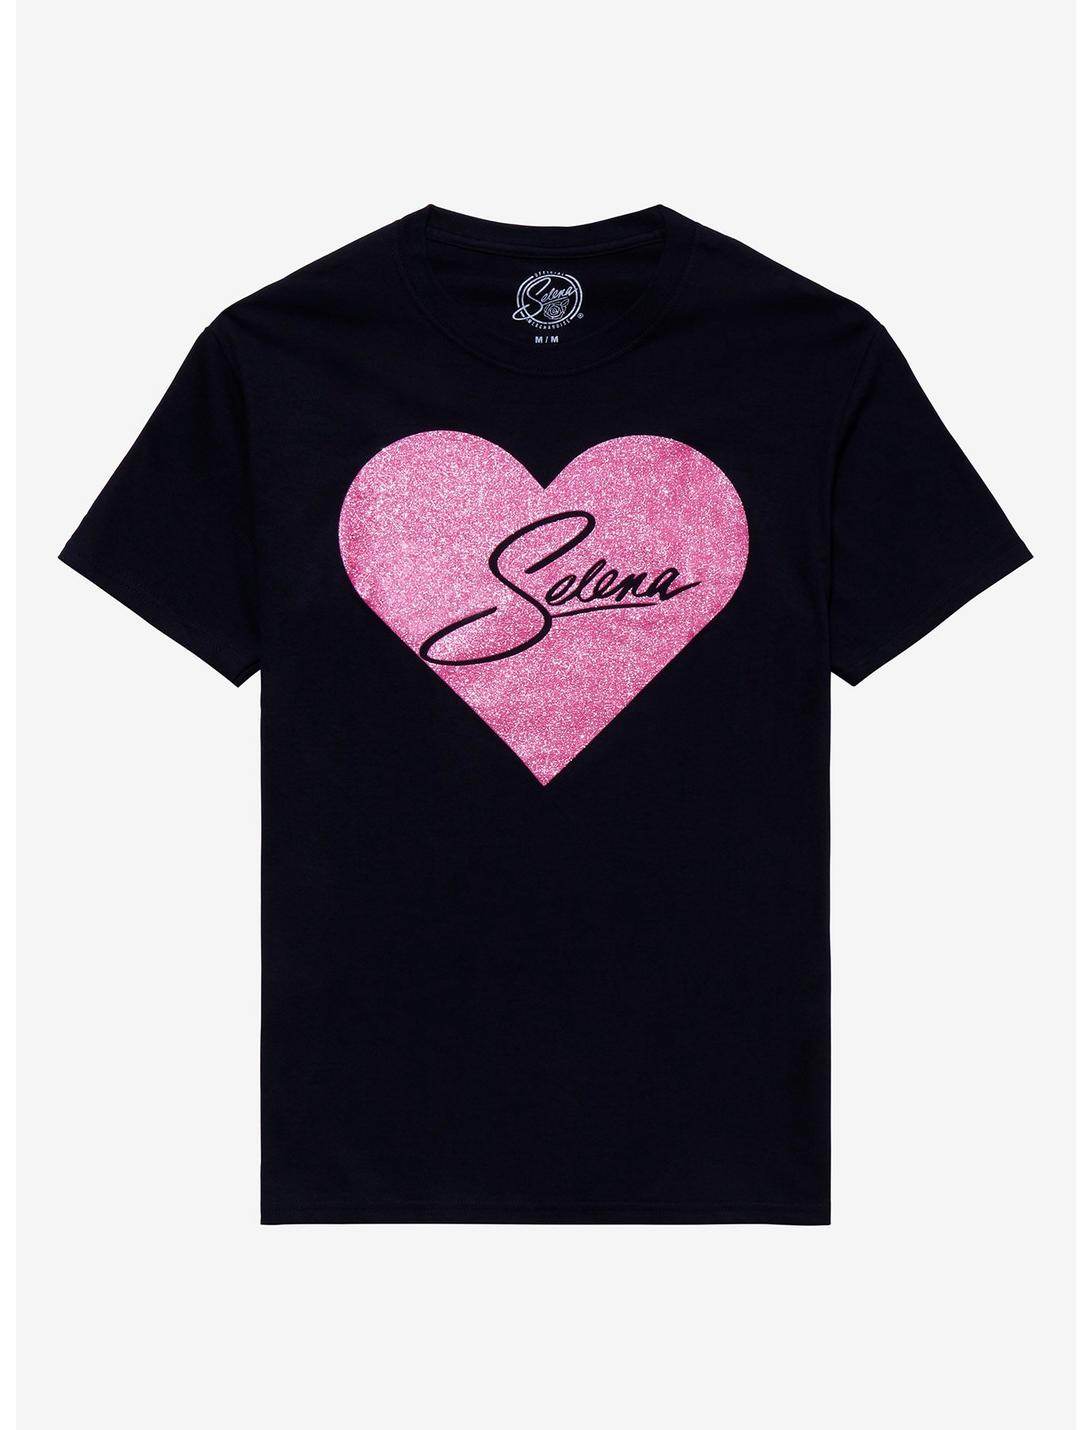 Selena Glitter Heart Boyfriend Fit Girls T-Shirt, BLACK, hi-res